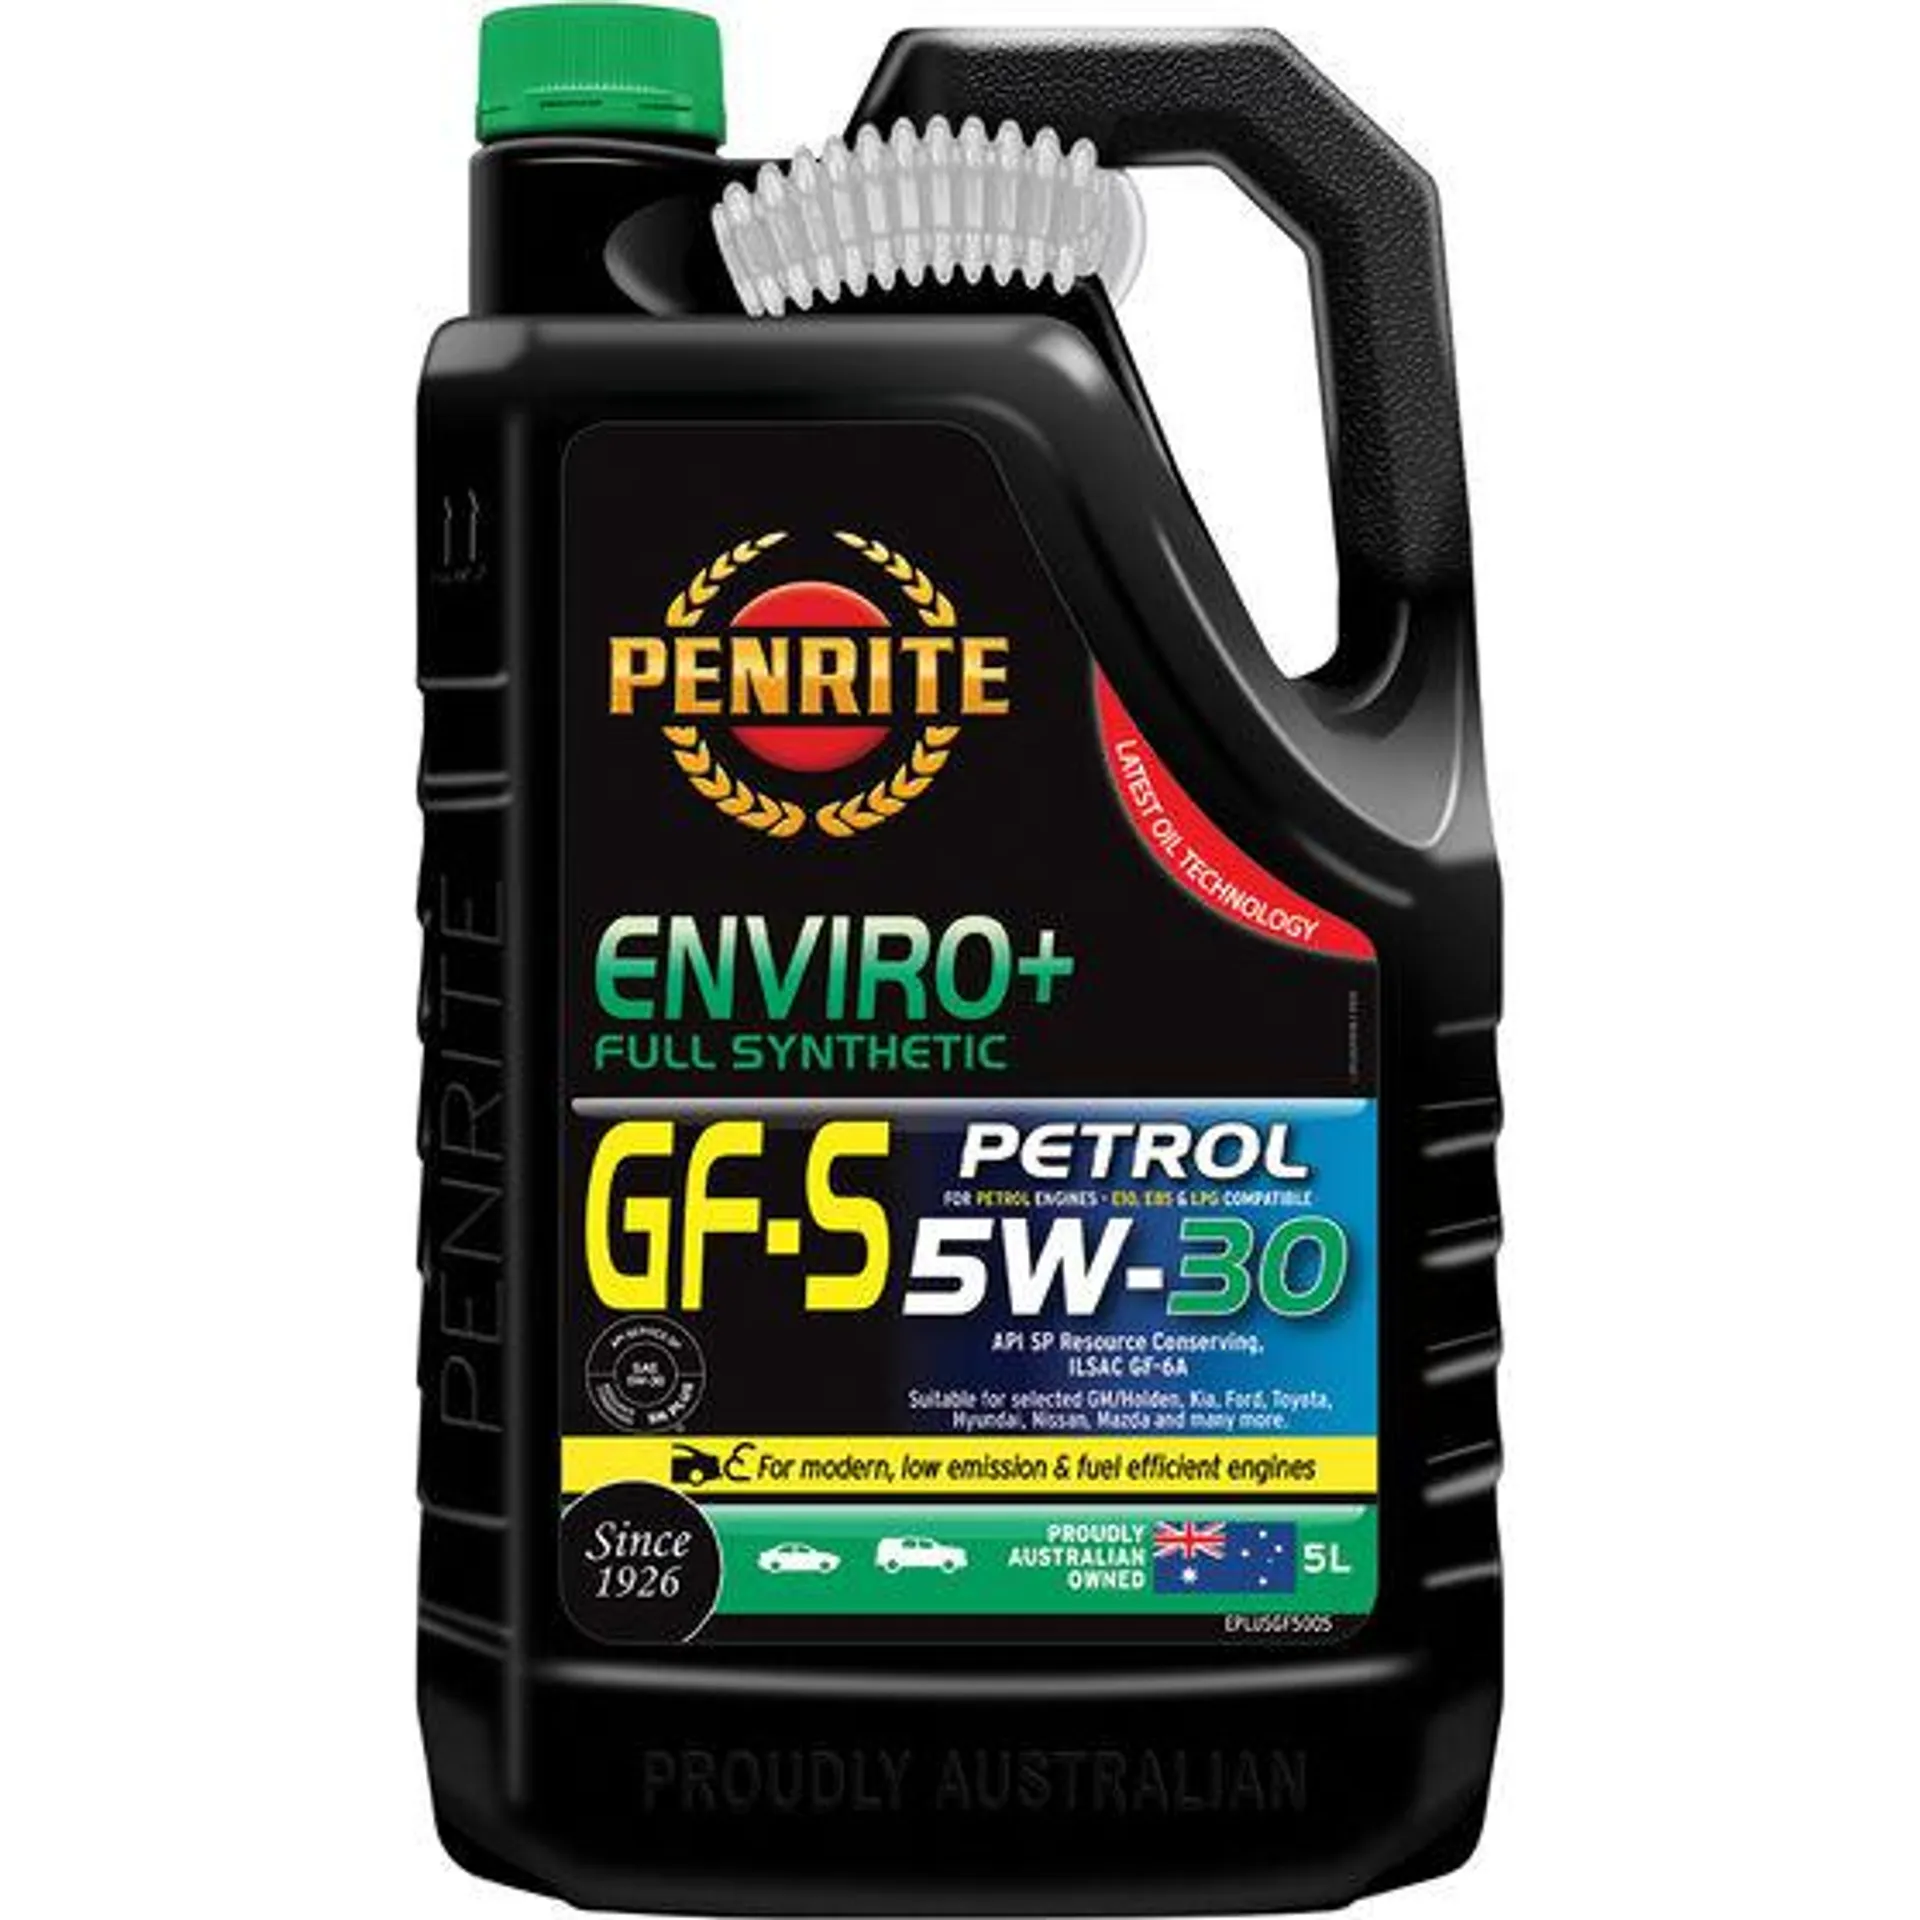 Penrite Enviro+ GF-S Engine Oil - 5W-30 5 Litre